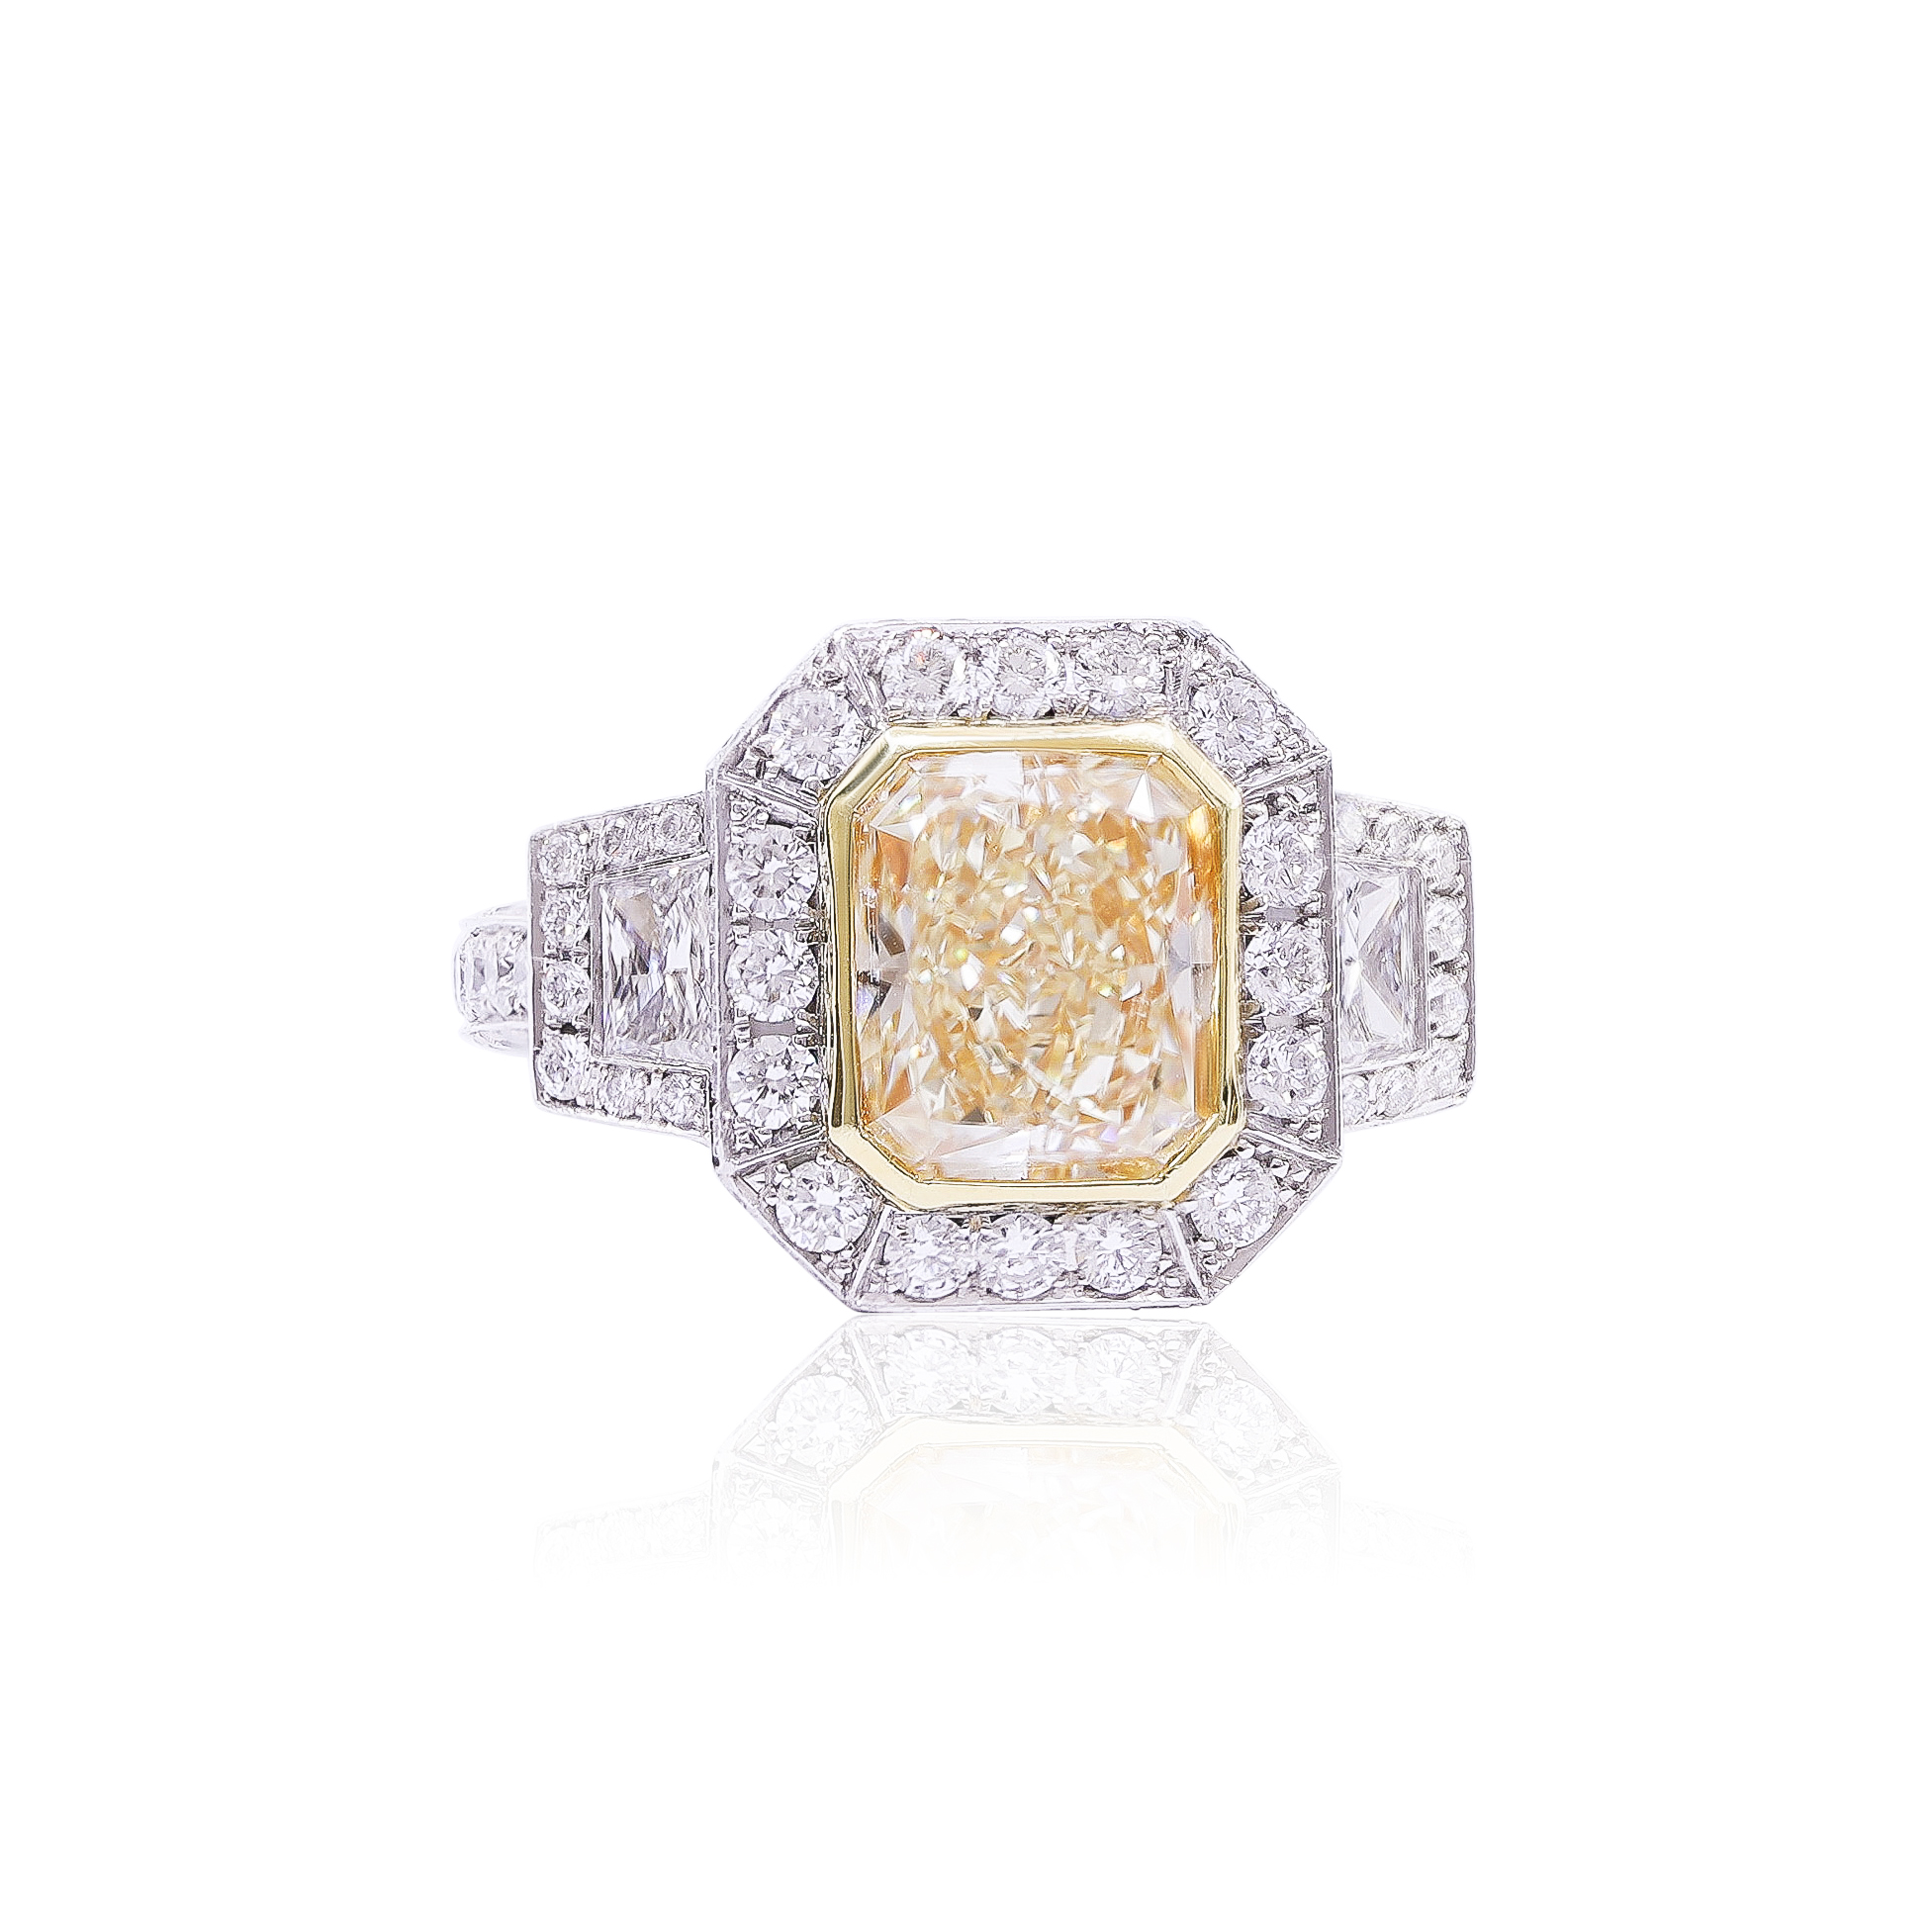 Platinum three-stone diamond ring with a fancy yellow radiant center diamond